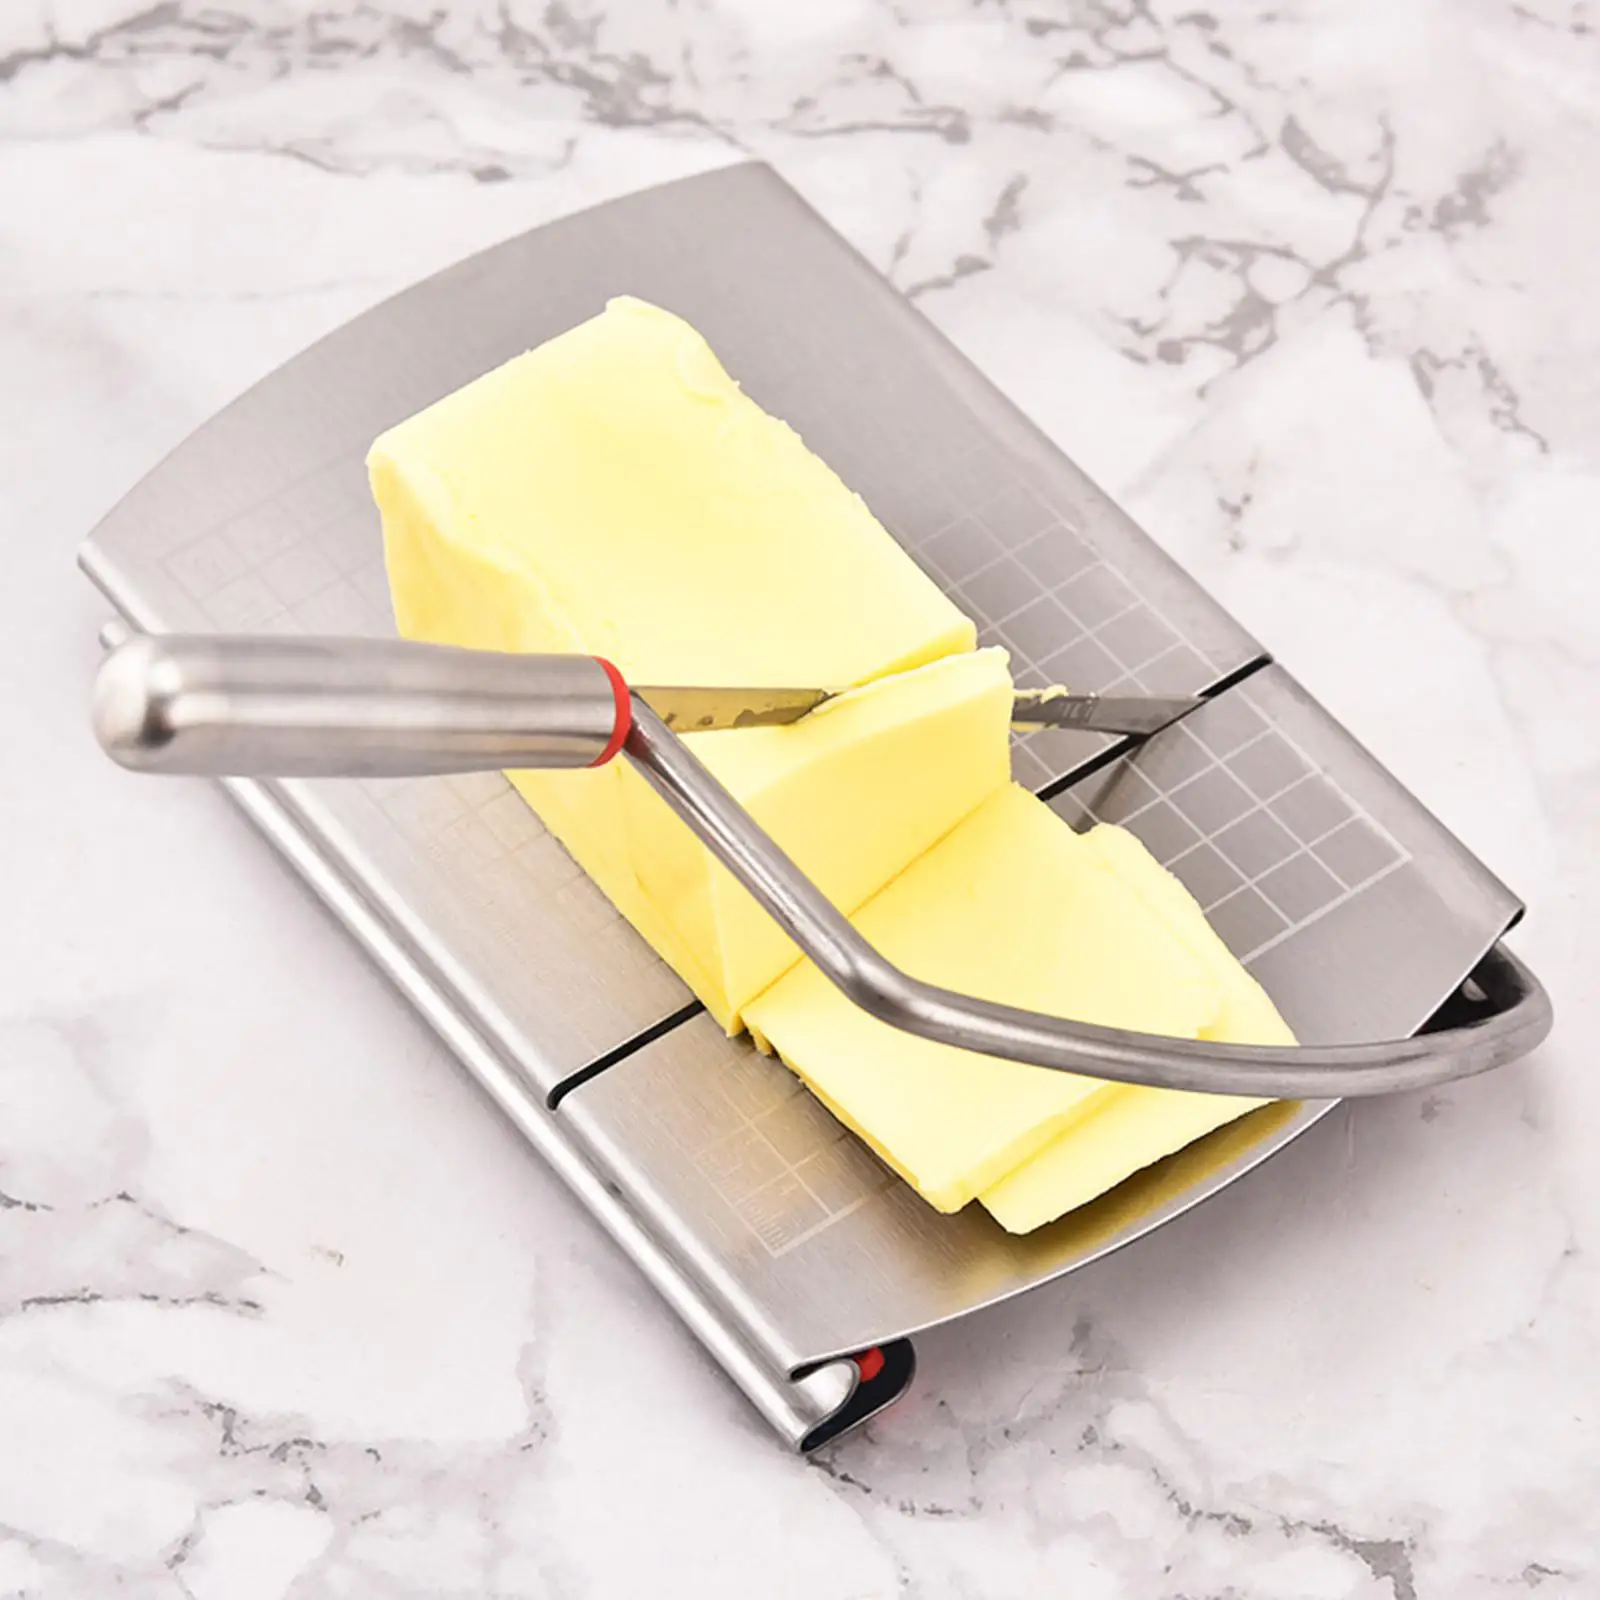 Stainless Steel Cheese Slicer Gift Heavy Duty Cheese Slicer Cutting Board Cheese Cutter for Kitchen Home Cafe Bar Restaurant